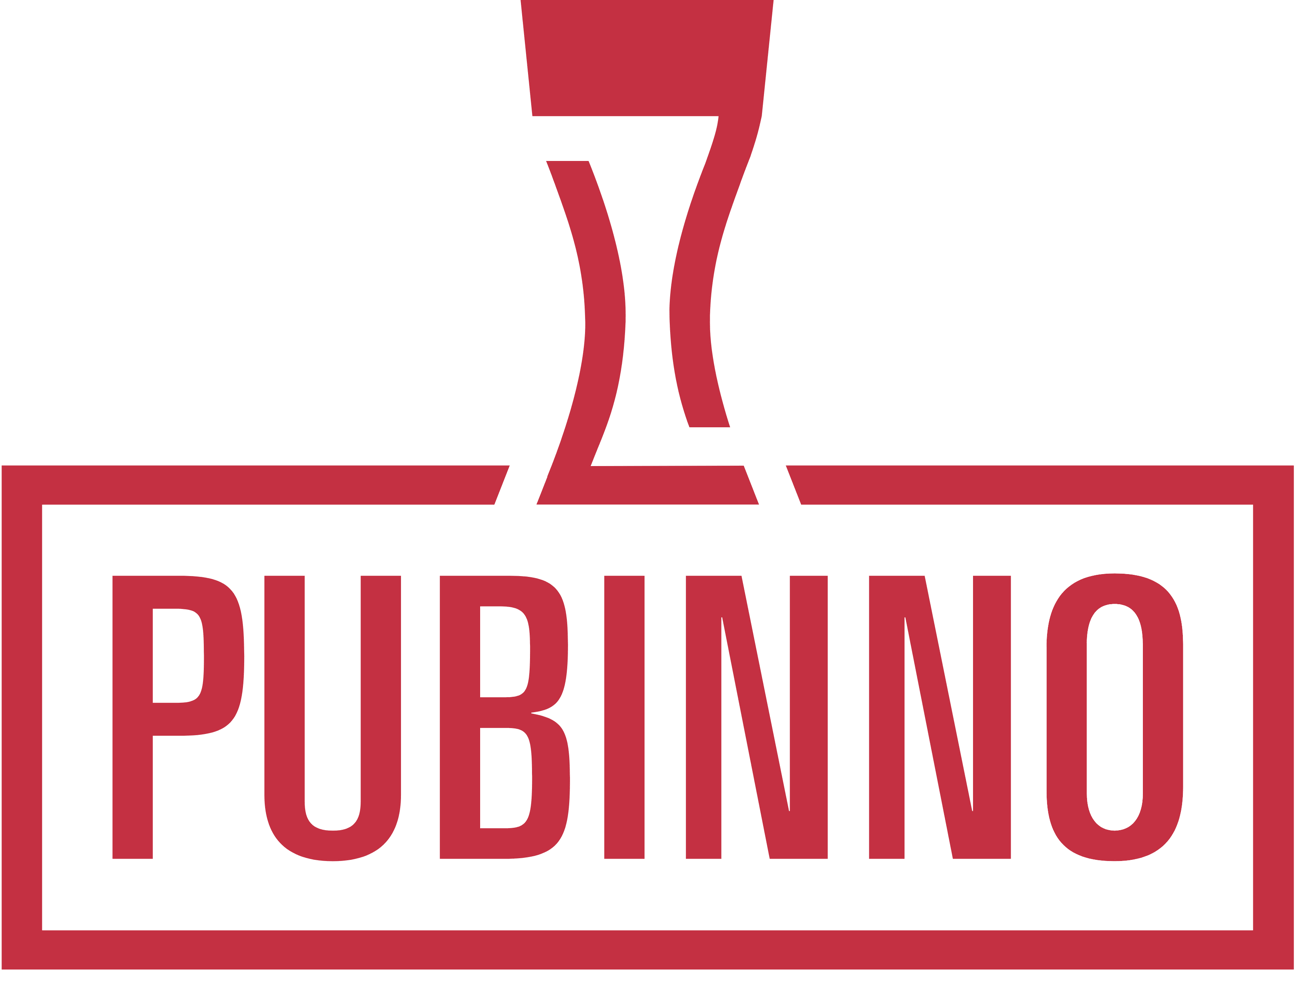 Cousins Factory Pubinno logo